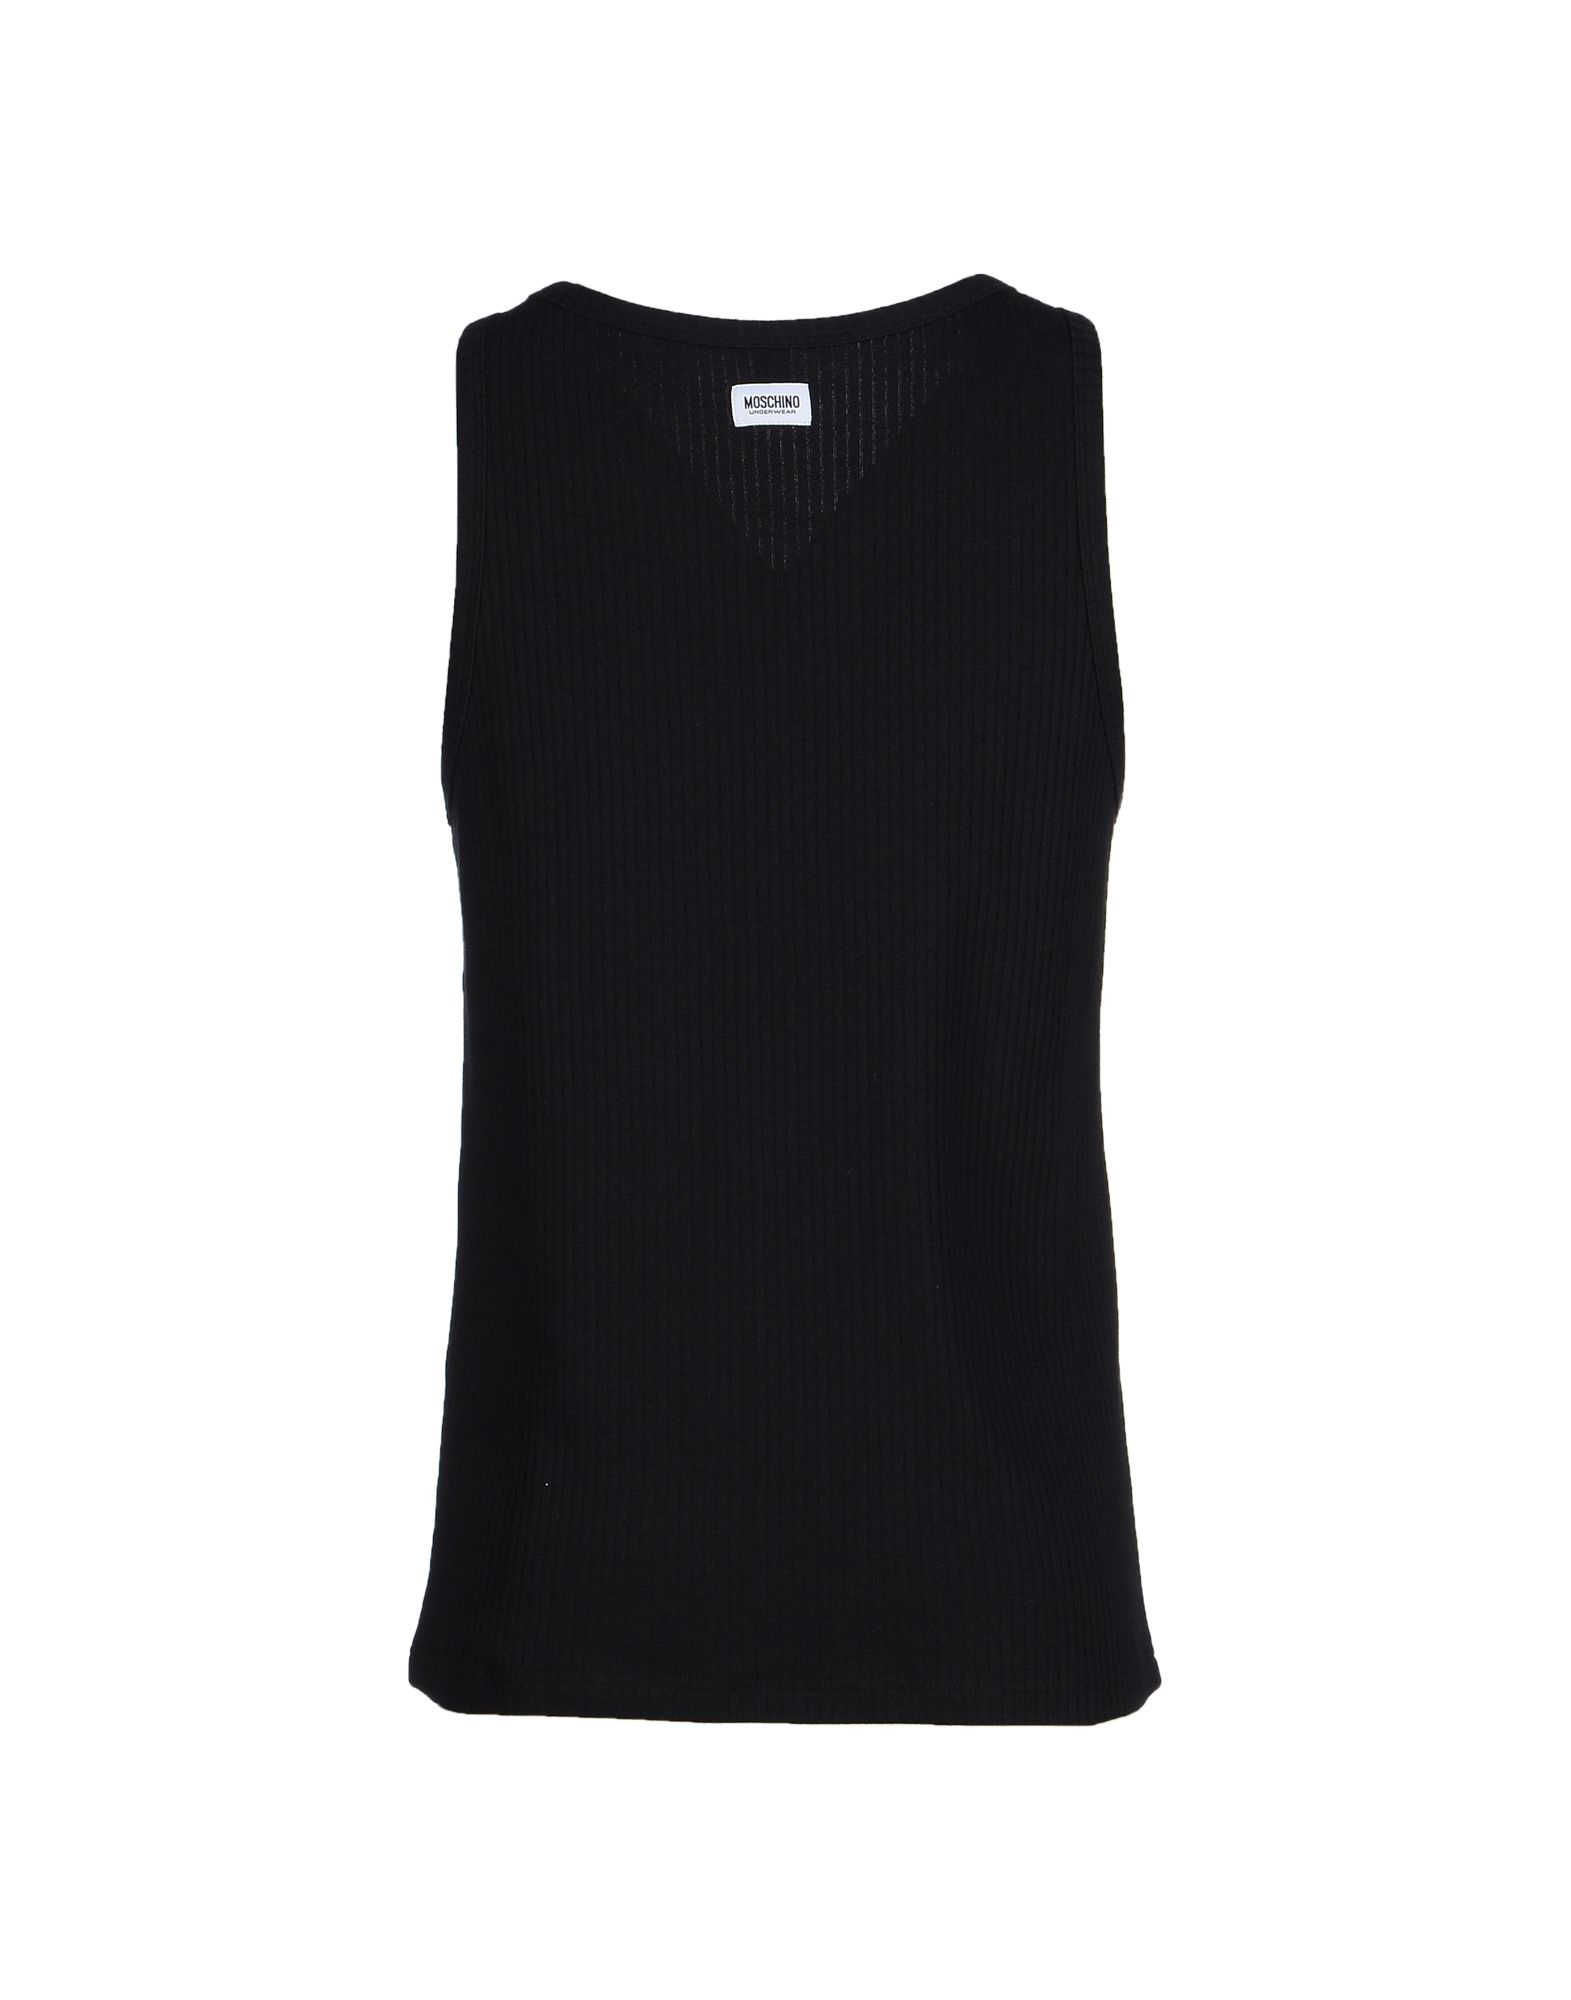 Lyst - Moschino Sleeveless Undershirt in Black for Men